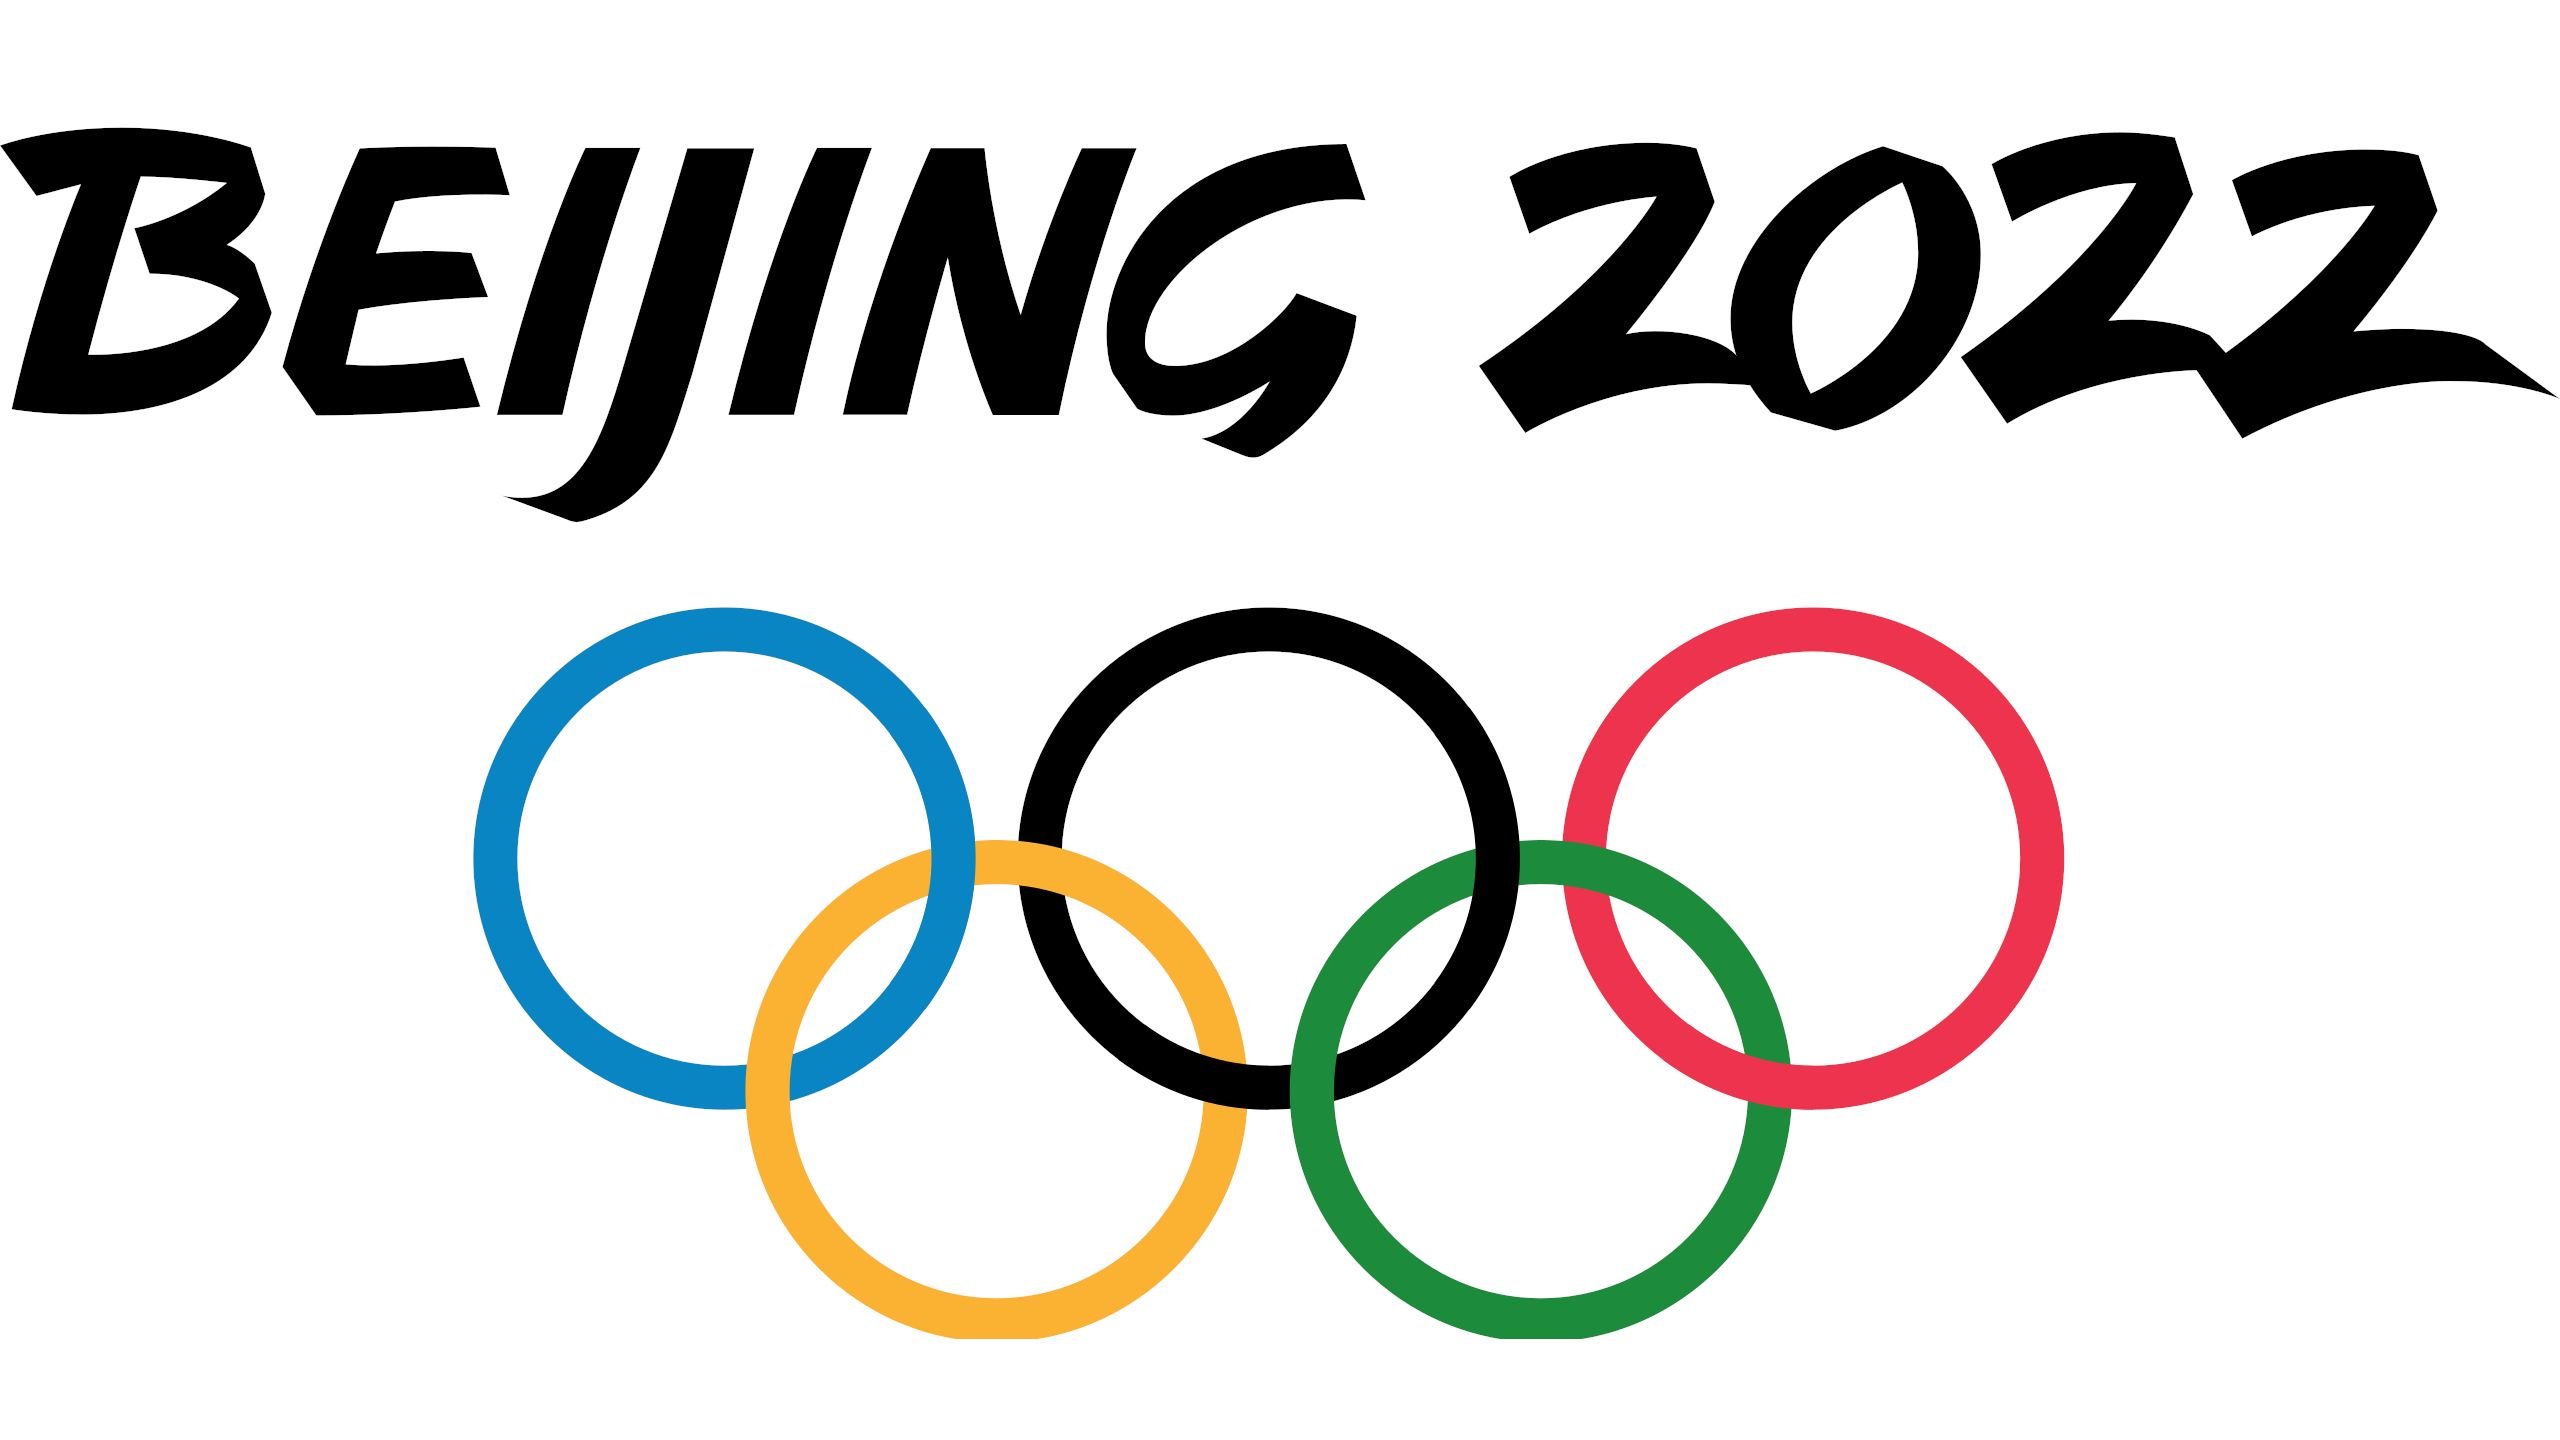 Файл олимпиады. Логотип олимпиады в Пекине 2022. Логотип зимней олимпиады в Пекине 2022. Эмблема Олимпийских игр в Пекине зимних 2022. Олимпийские игры в Пекине 2022 логотип.